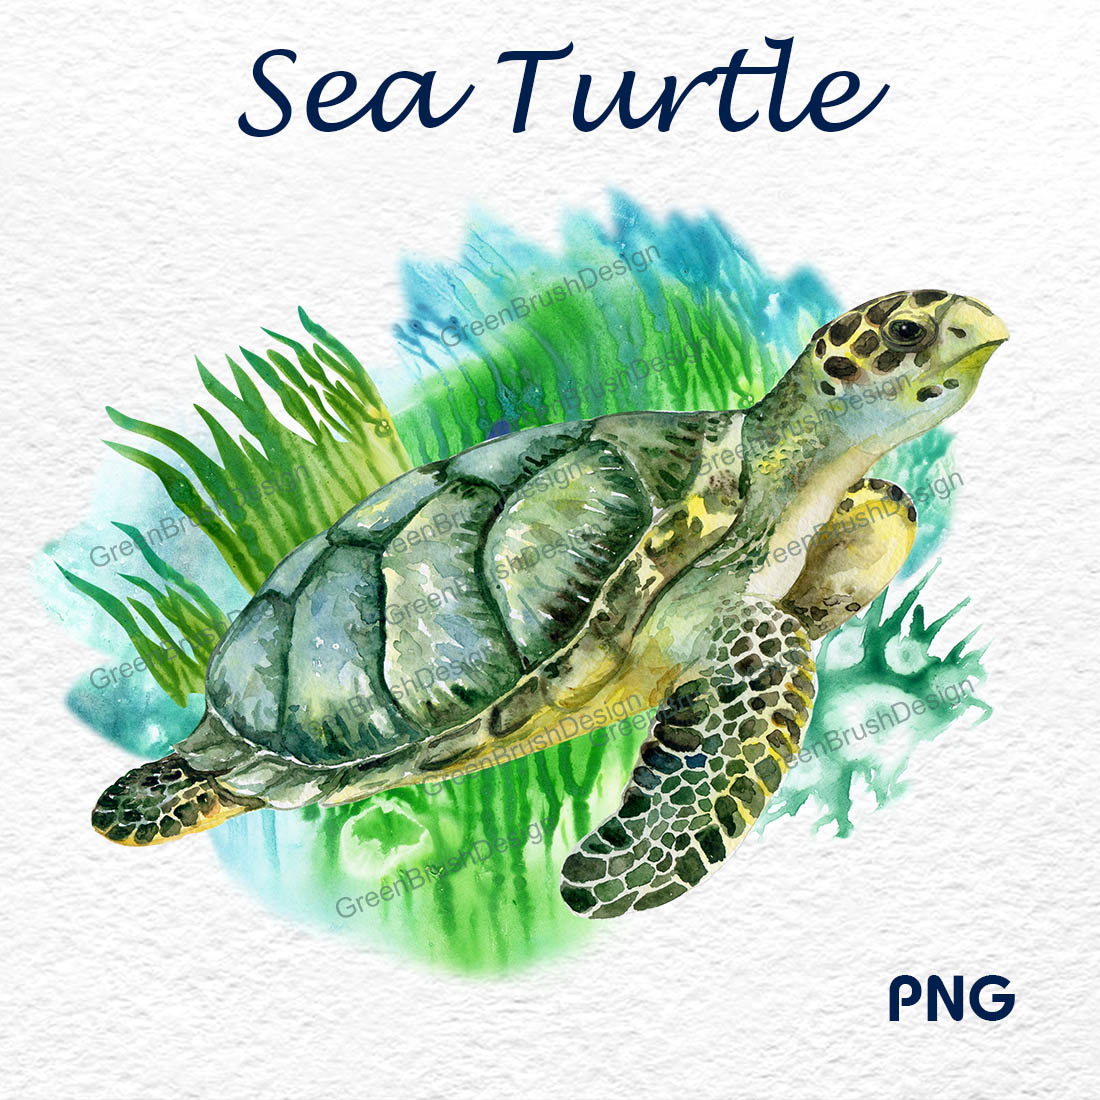 Watercolor Sea Turtle Green Turtle cover image.